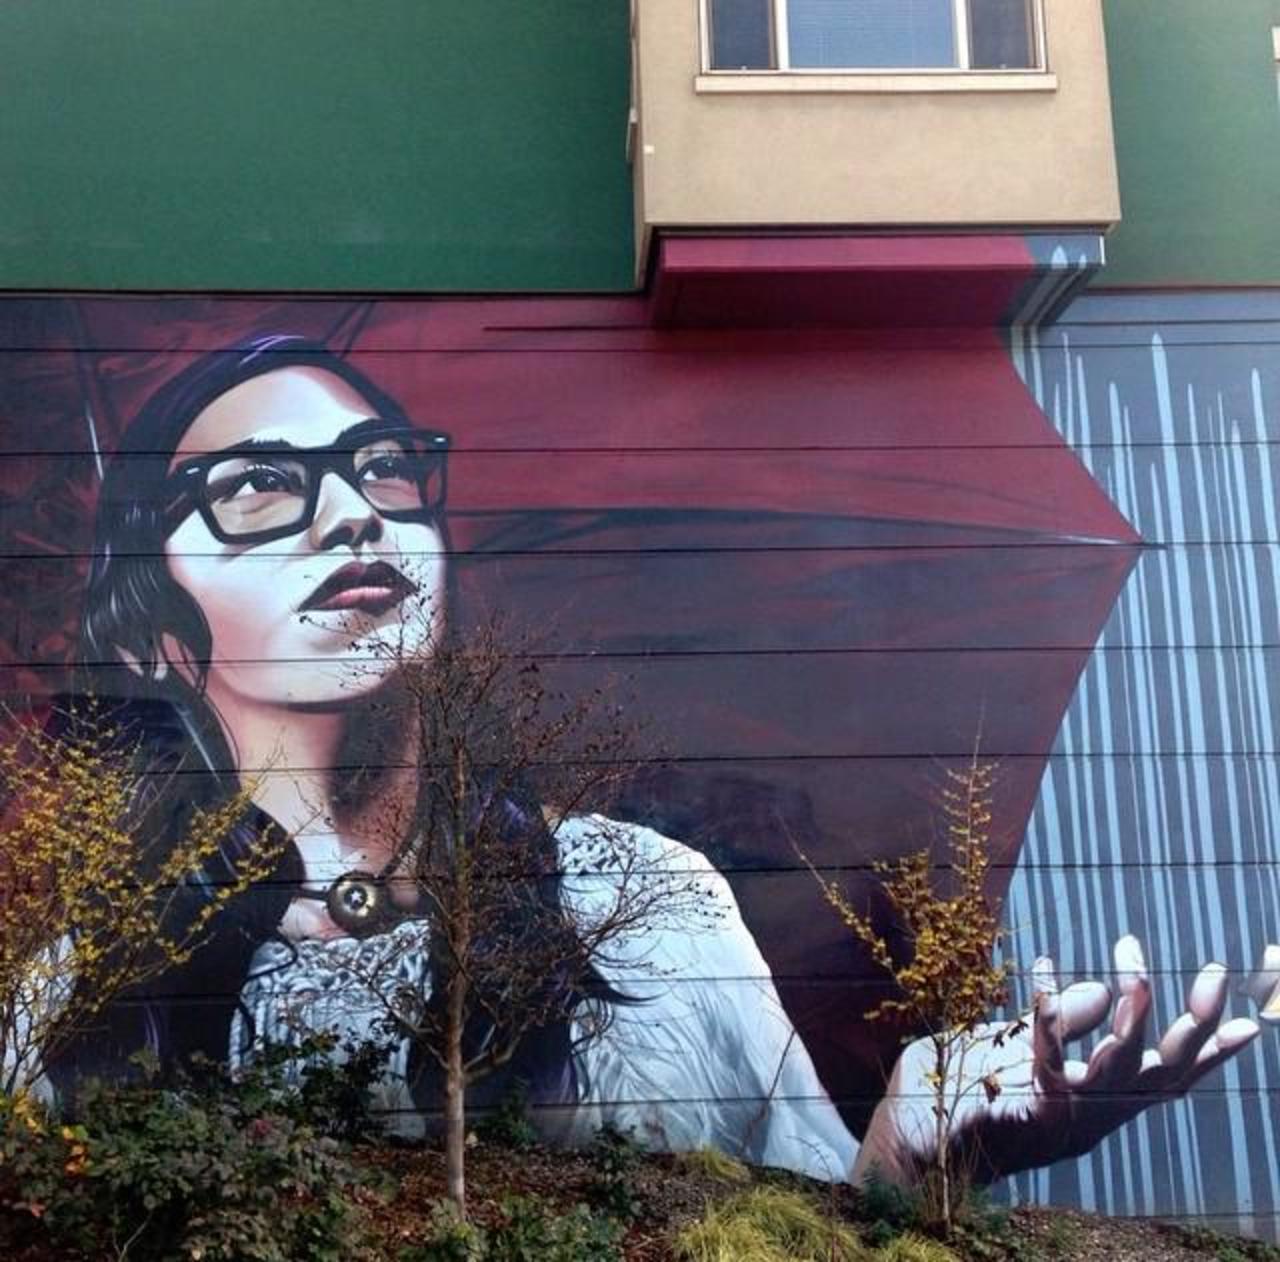 Artist Eras MFK Street Art piece in Capitol Hill, Seattle

#art #mural #graffiti #streetart http://t.co/MfBe8imRu6